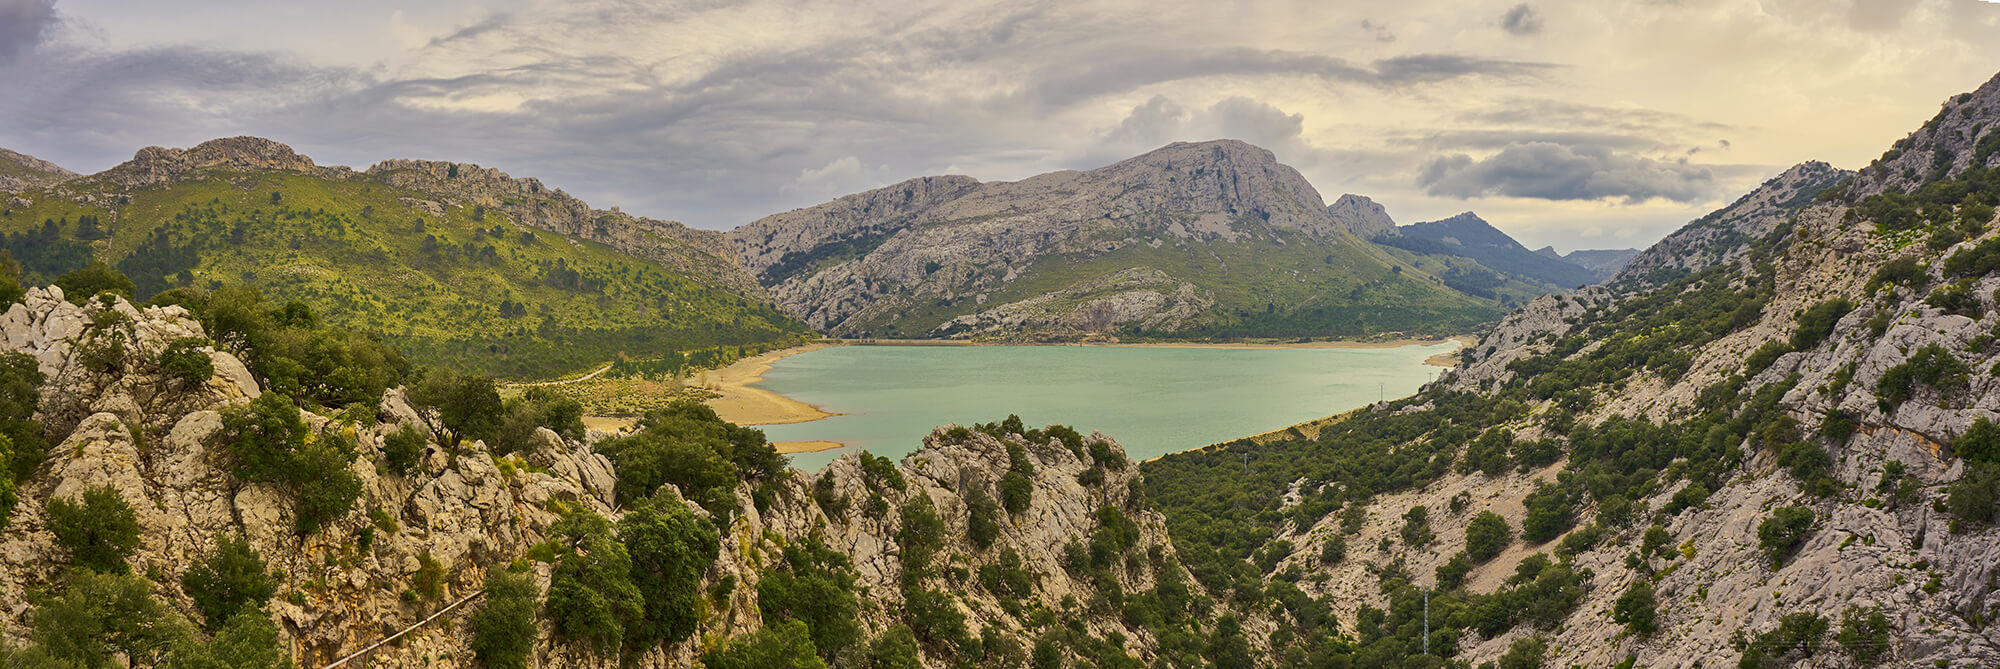 Cuber Reservoir in the Serra de Tramuntana mountain range